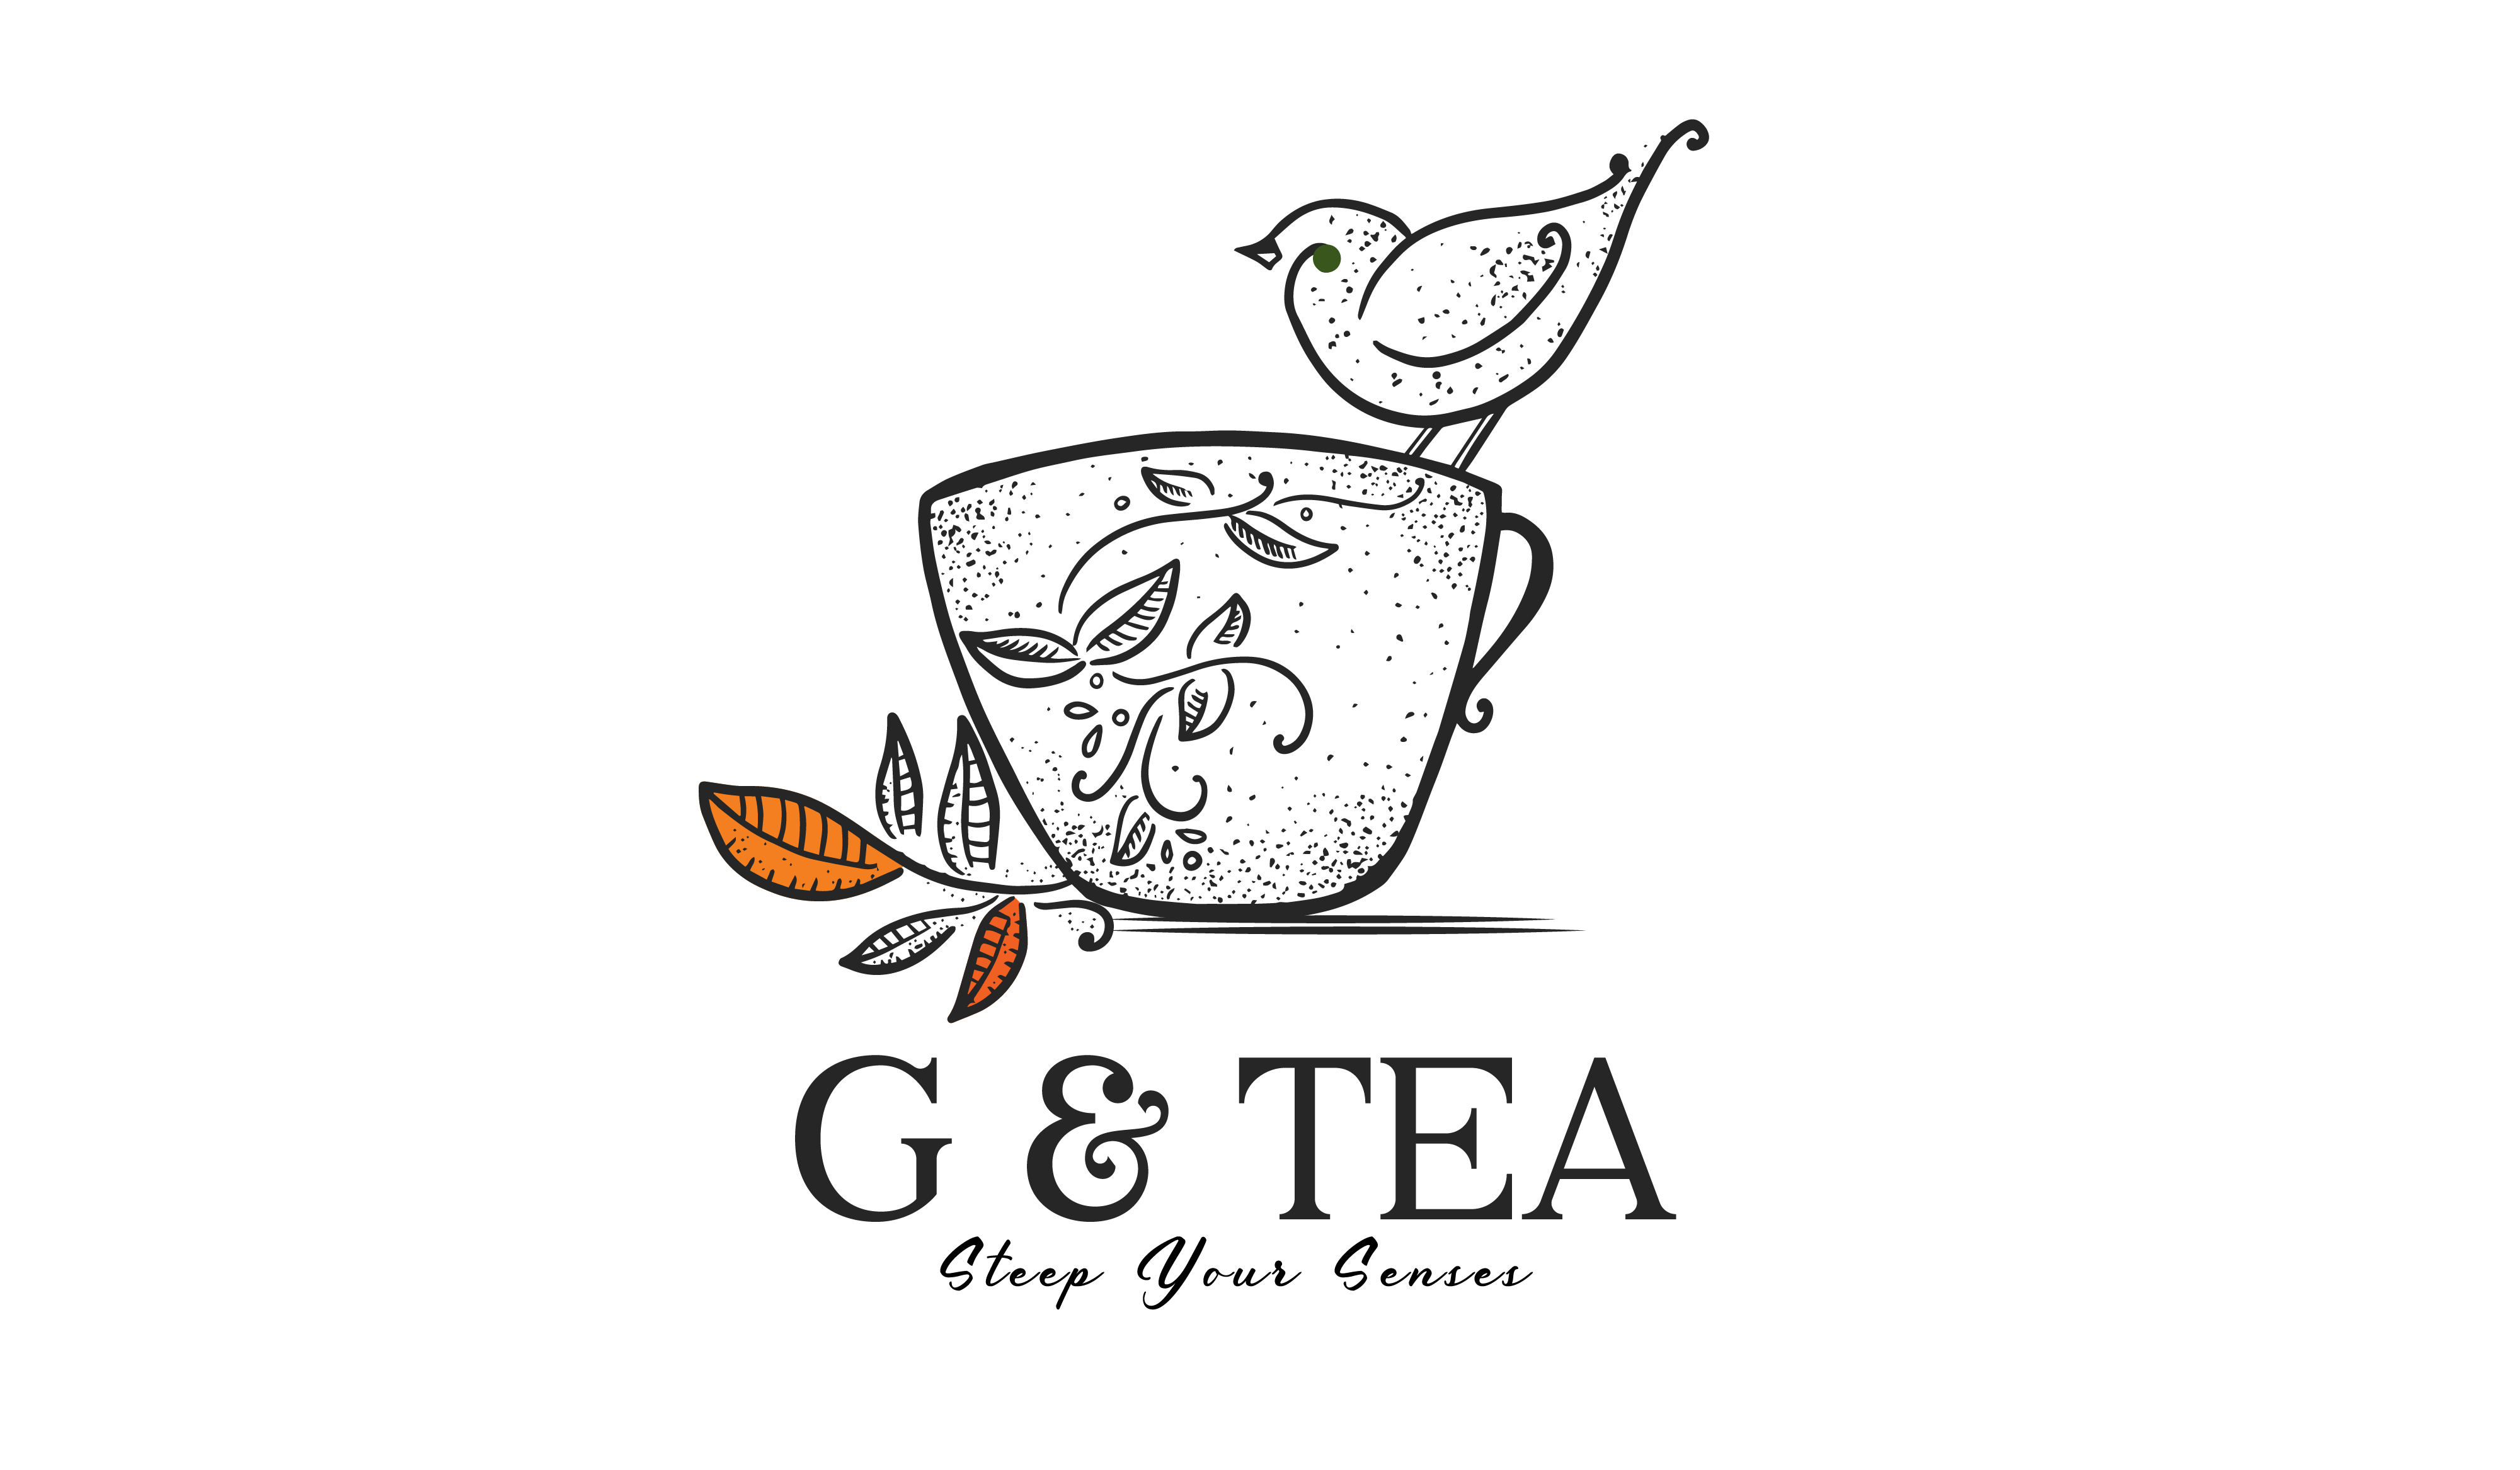 G & Tea